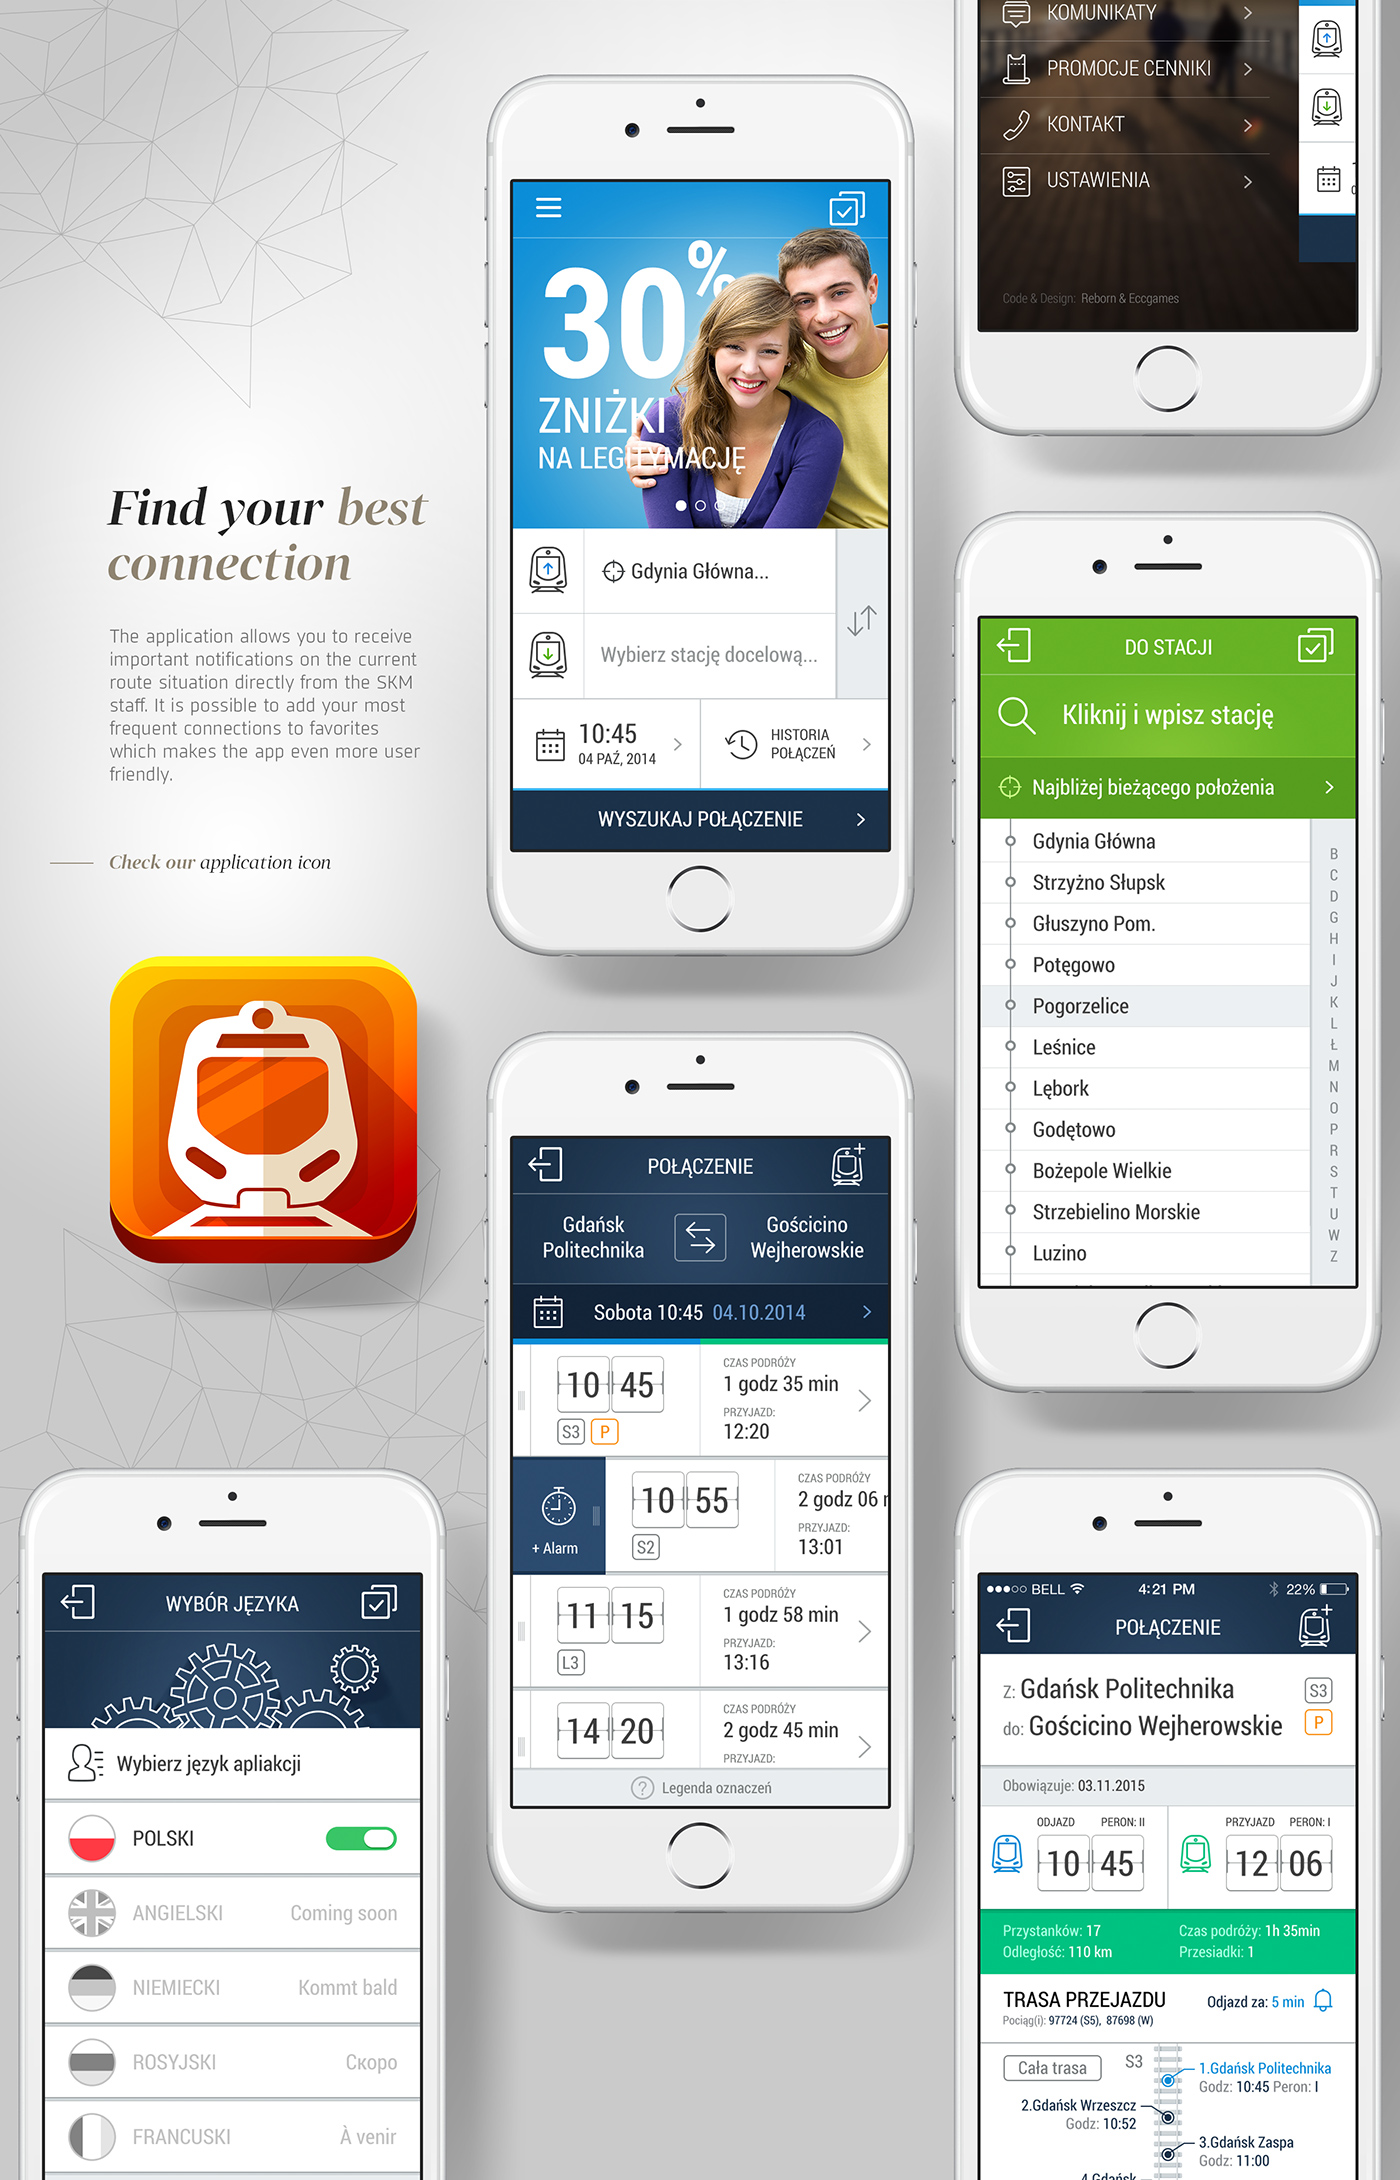 design app UI timetable Website